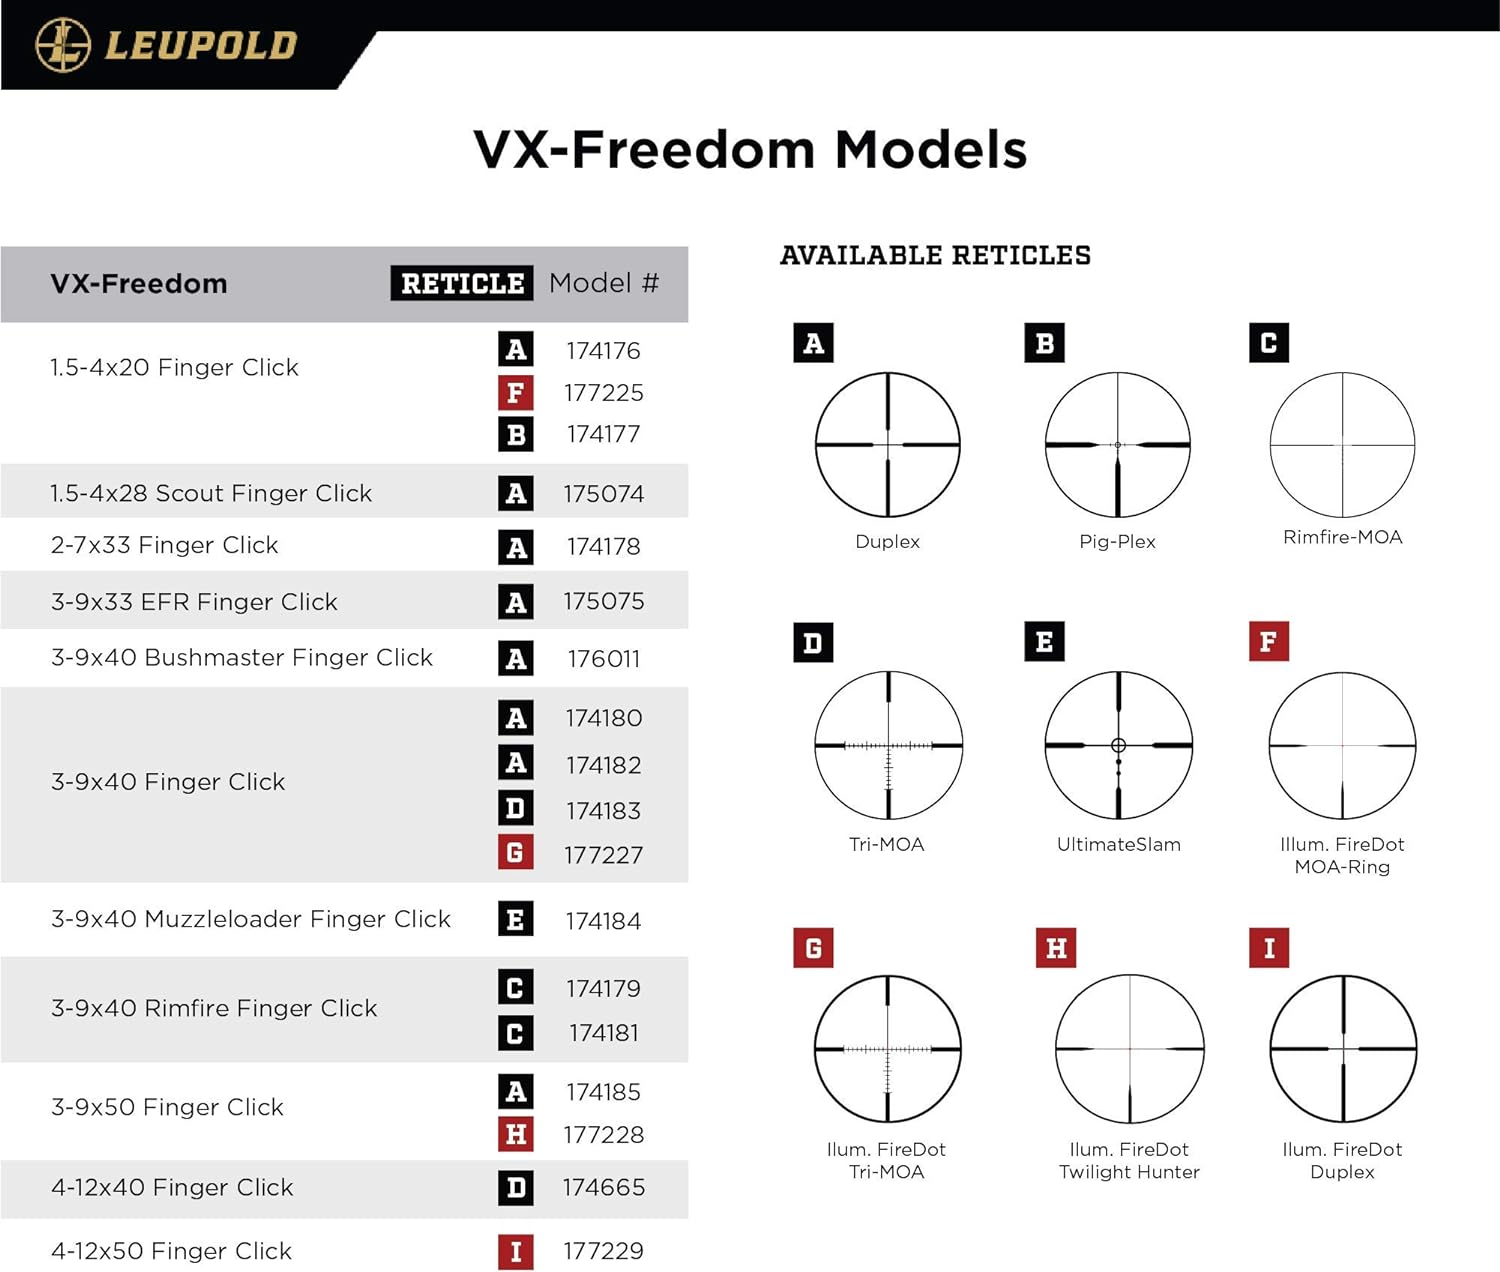 Leupold VX-Freedom 4-12x50mm Riflescope - Leupold VX-Freedom 4-12x50mm Riflescope Review